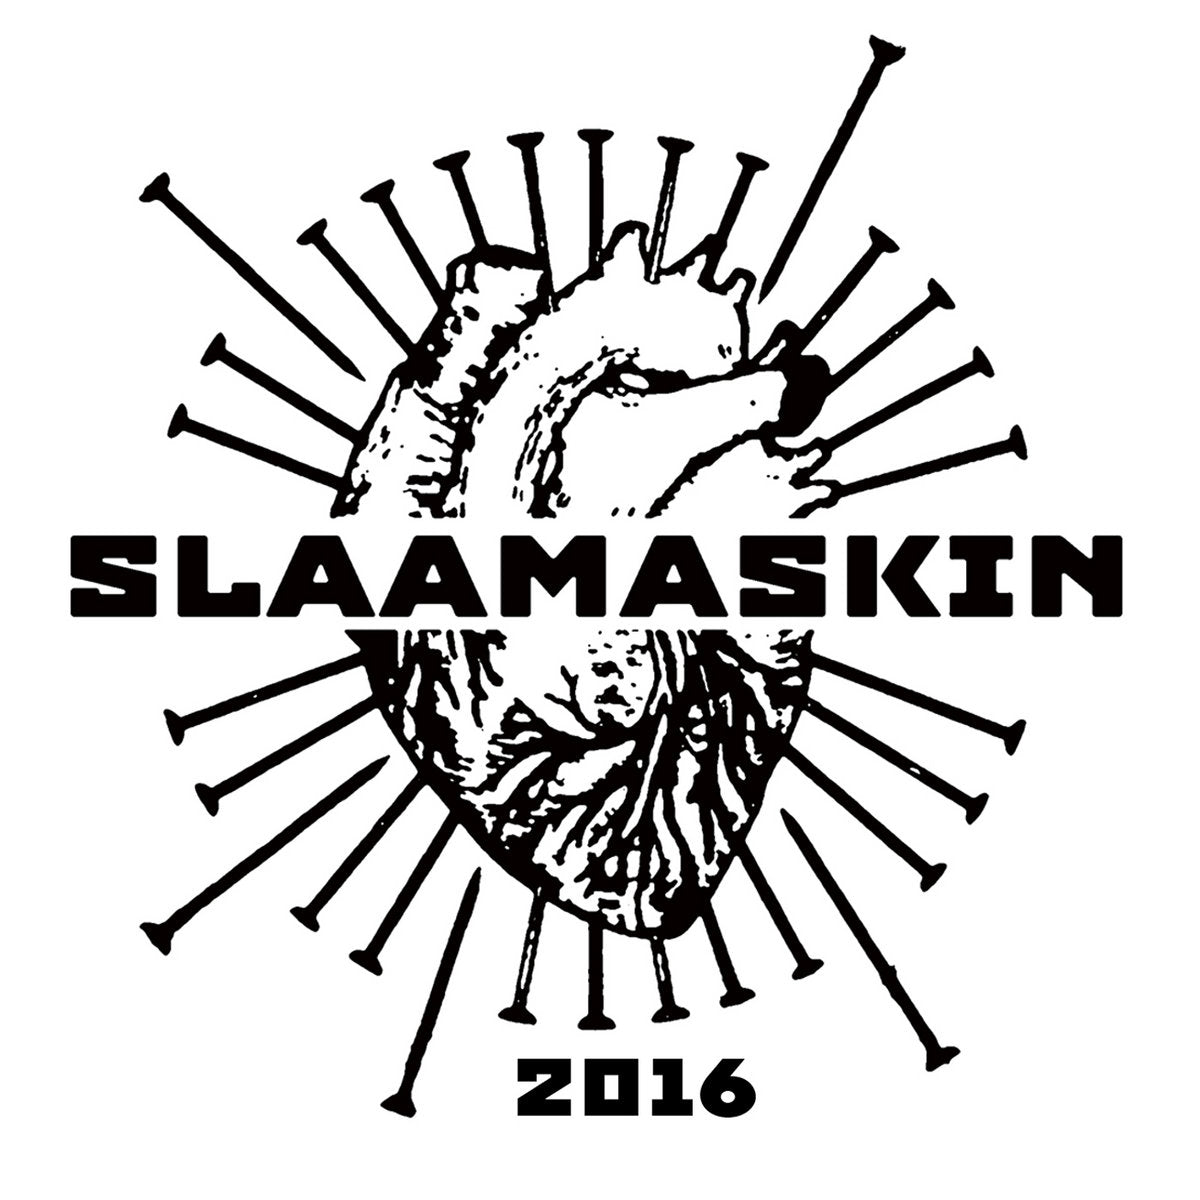 Slaamaskin - 2016 (CD)